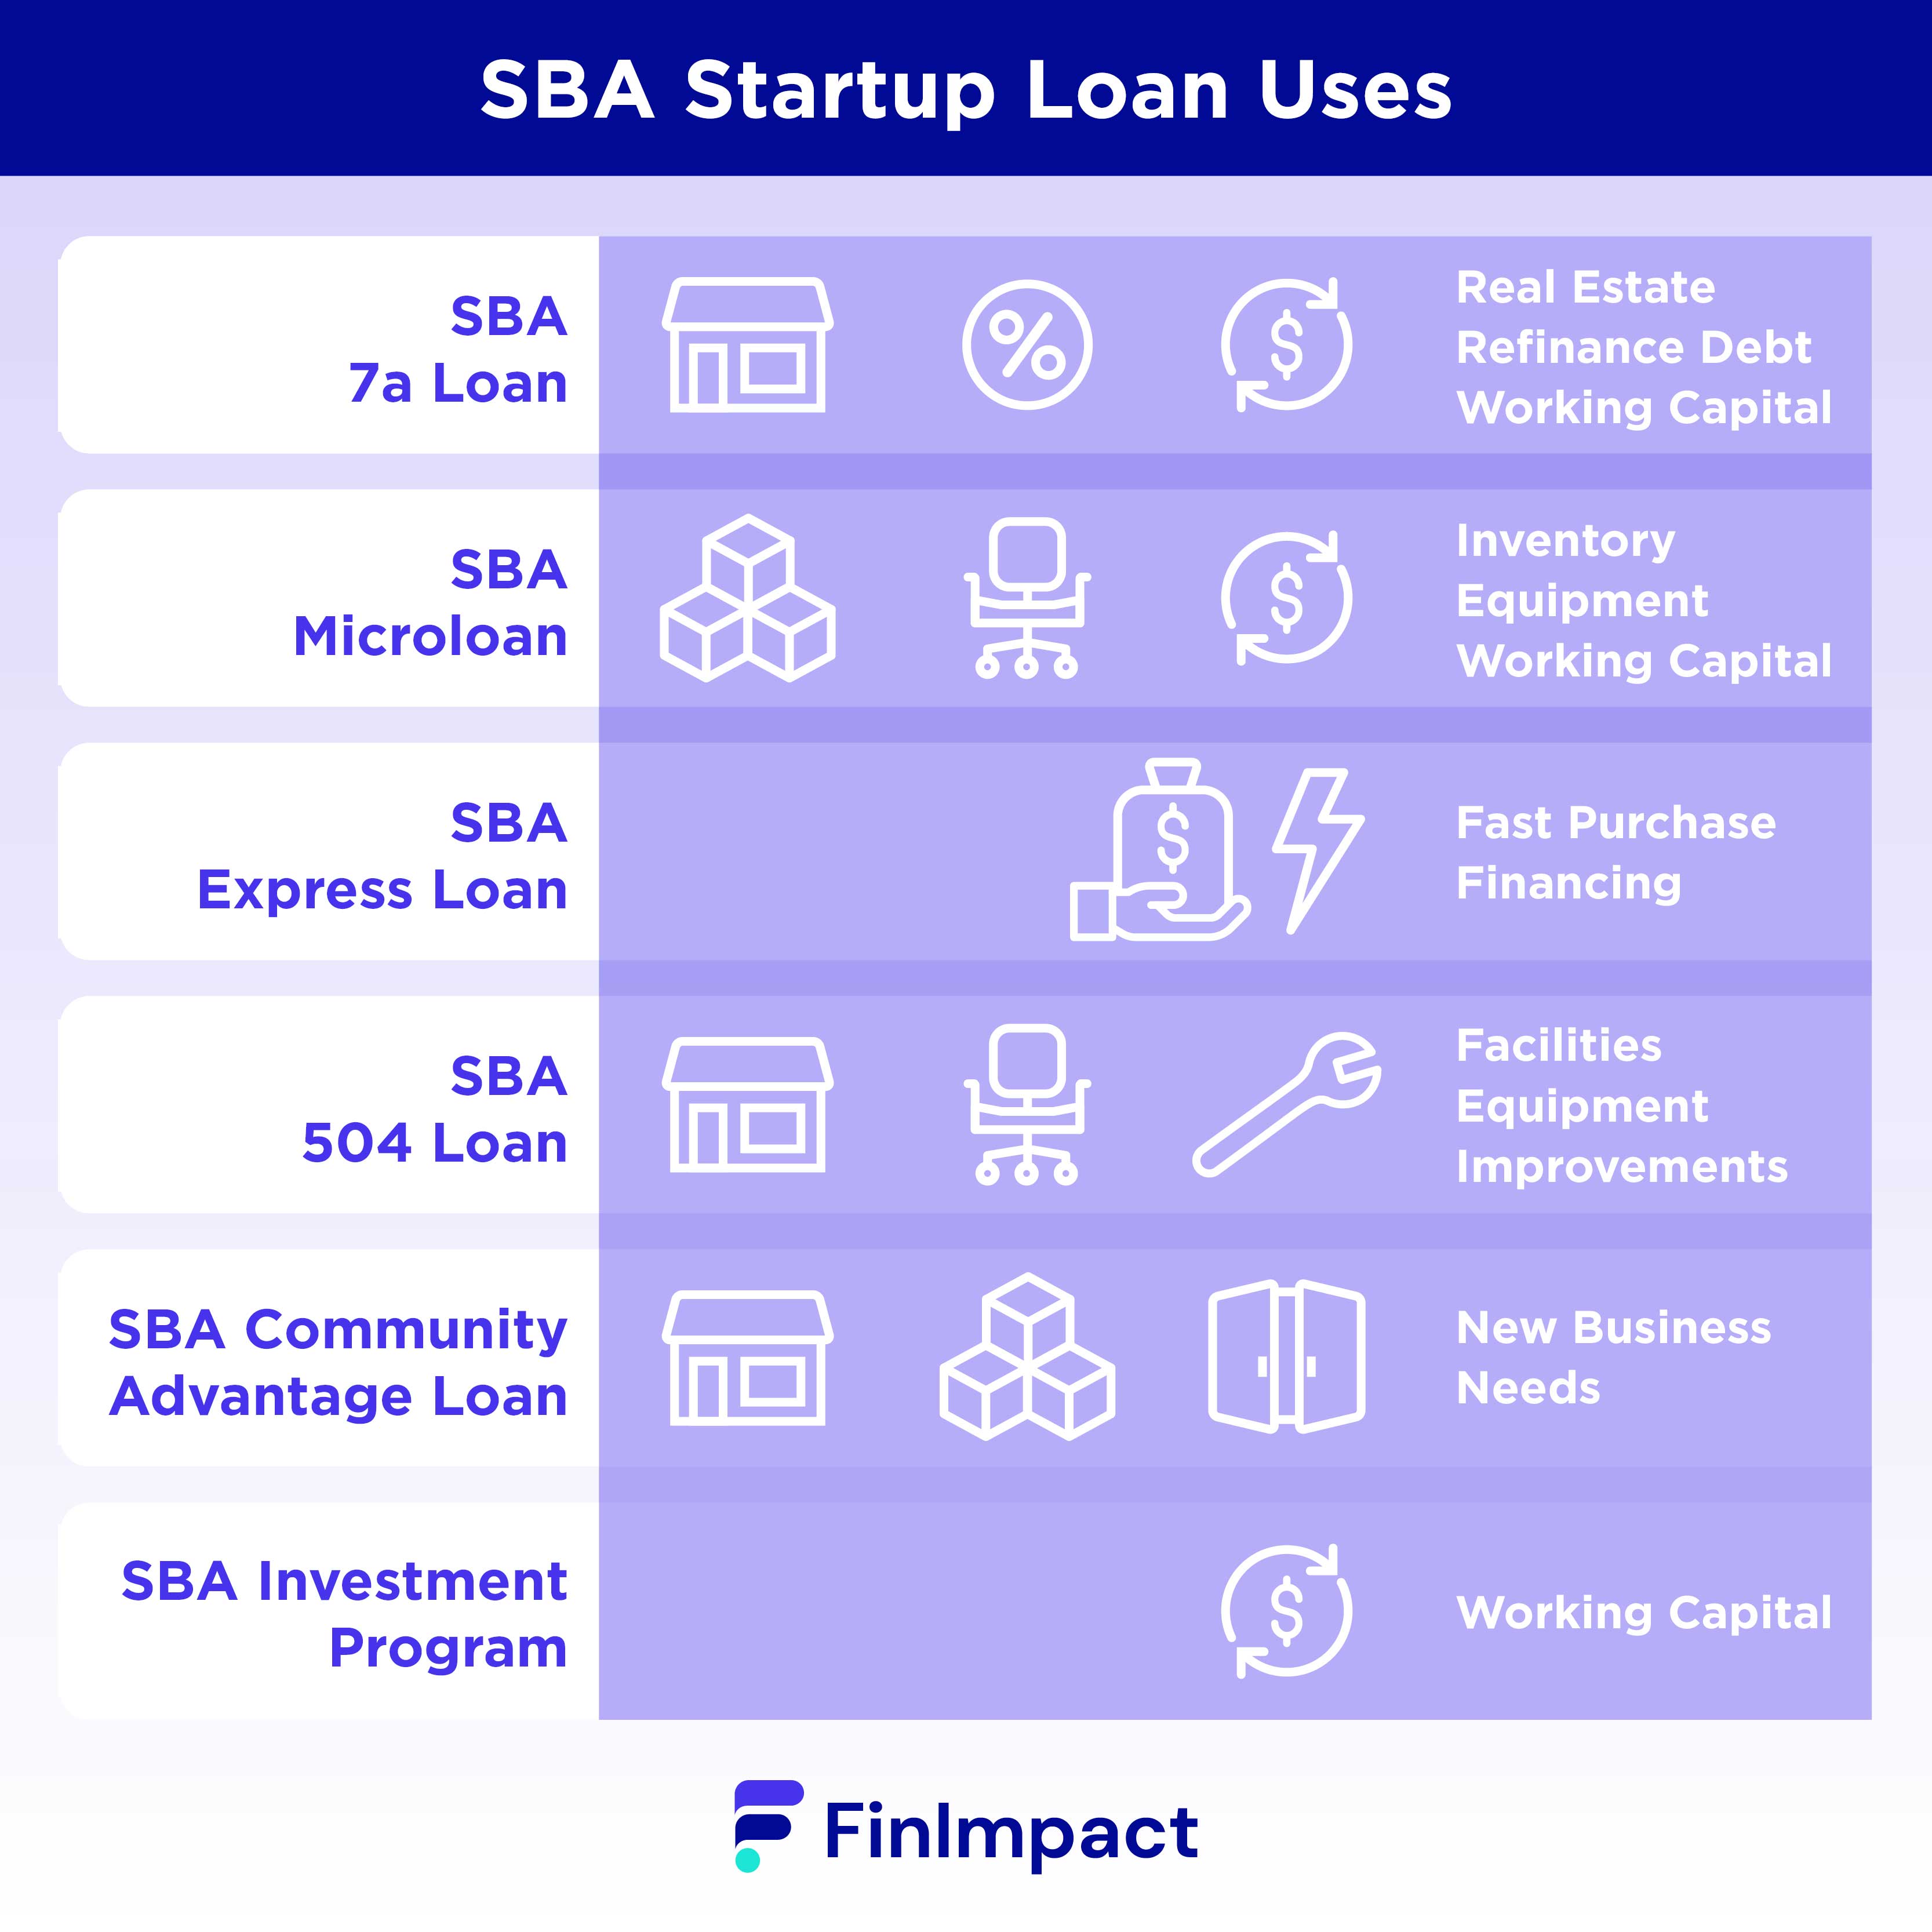 SBA Startup Loan Uses